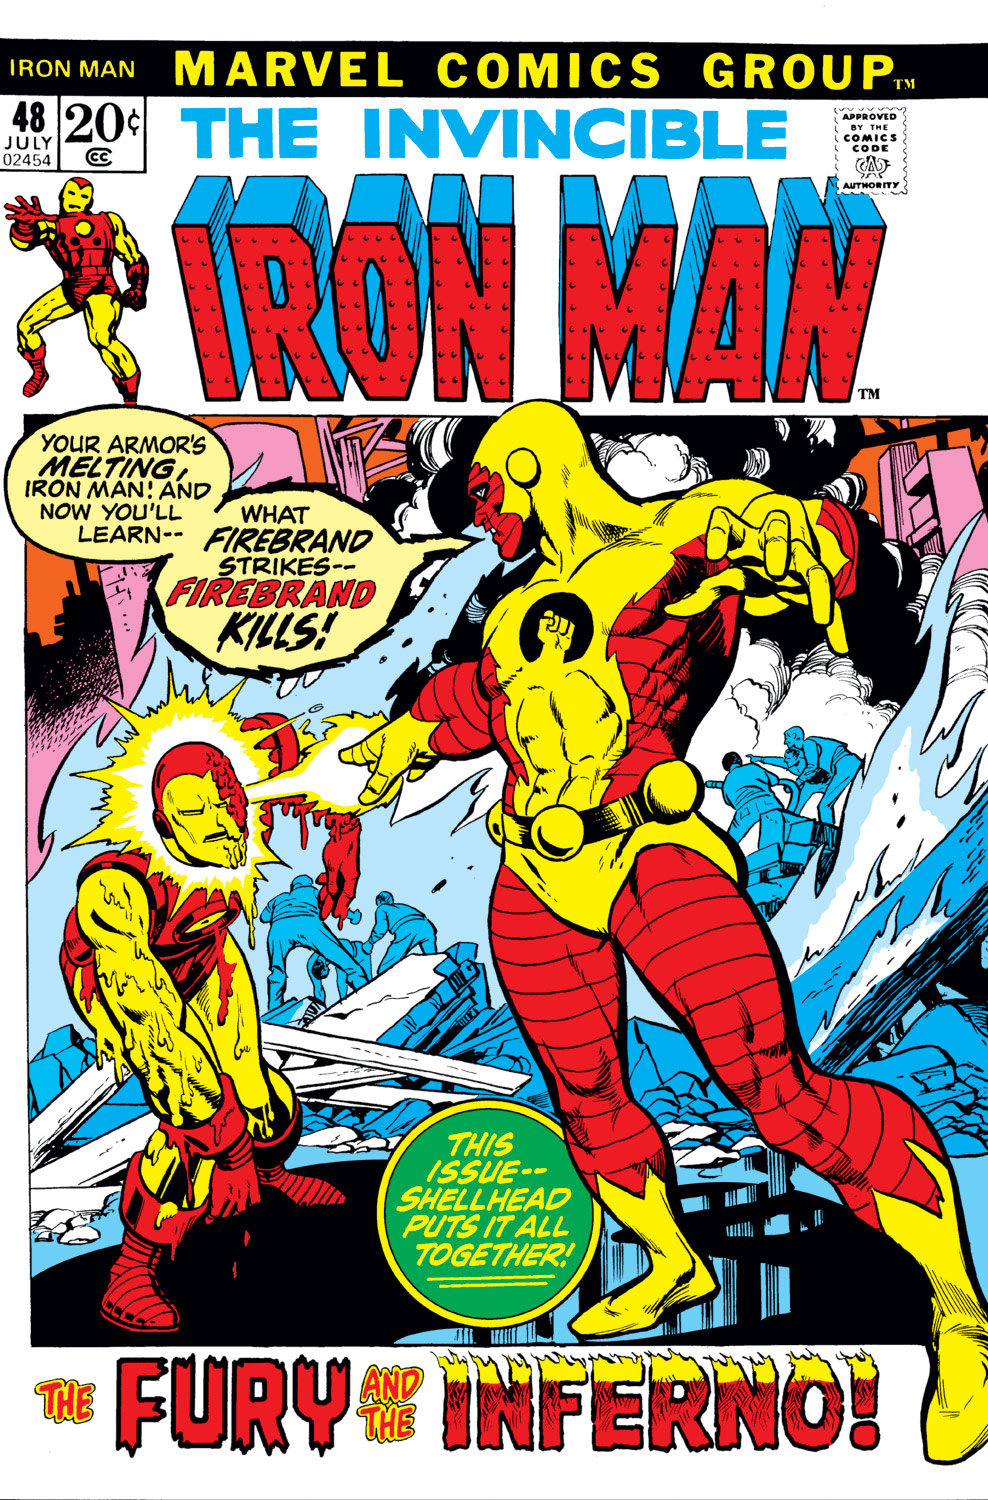 Iron Man (1968) #48